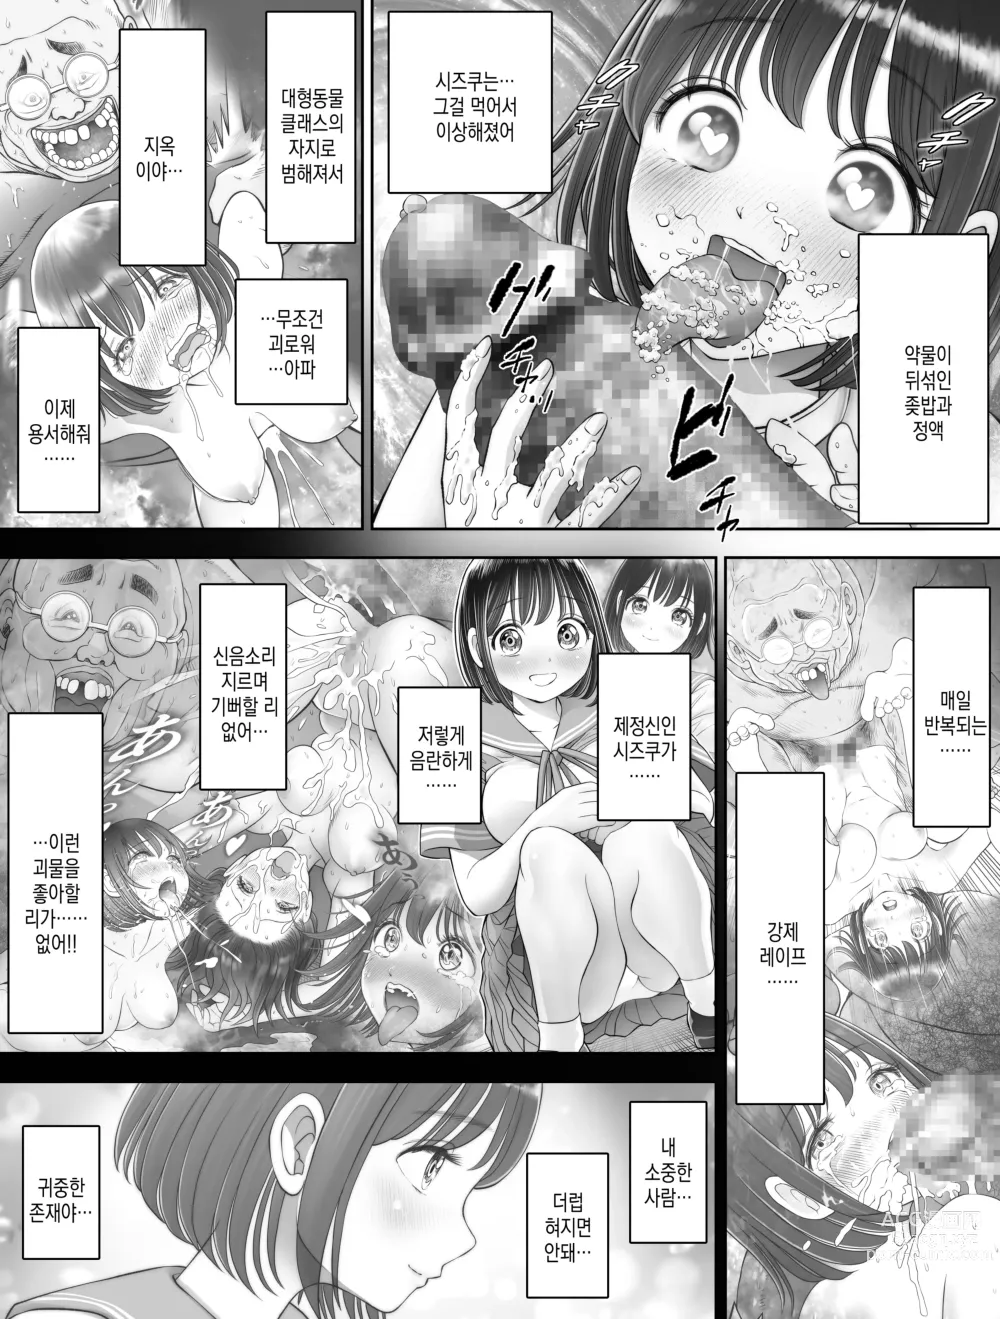 Page 19 of doujinshi 저는 매일밤 징그러운 자지가 달린 가정교사한테... 씨뿌리기 당하고있어요 3